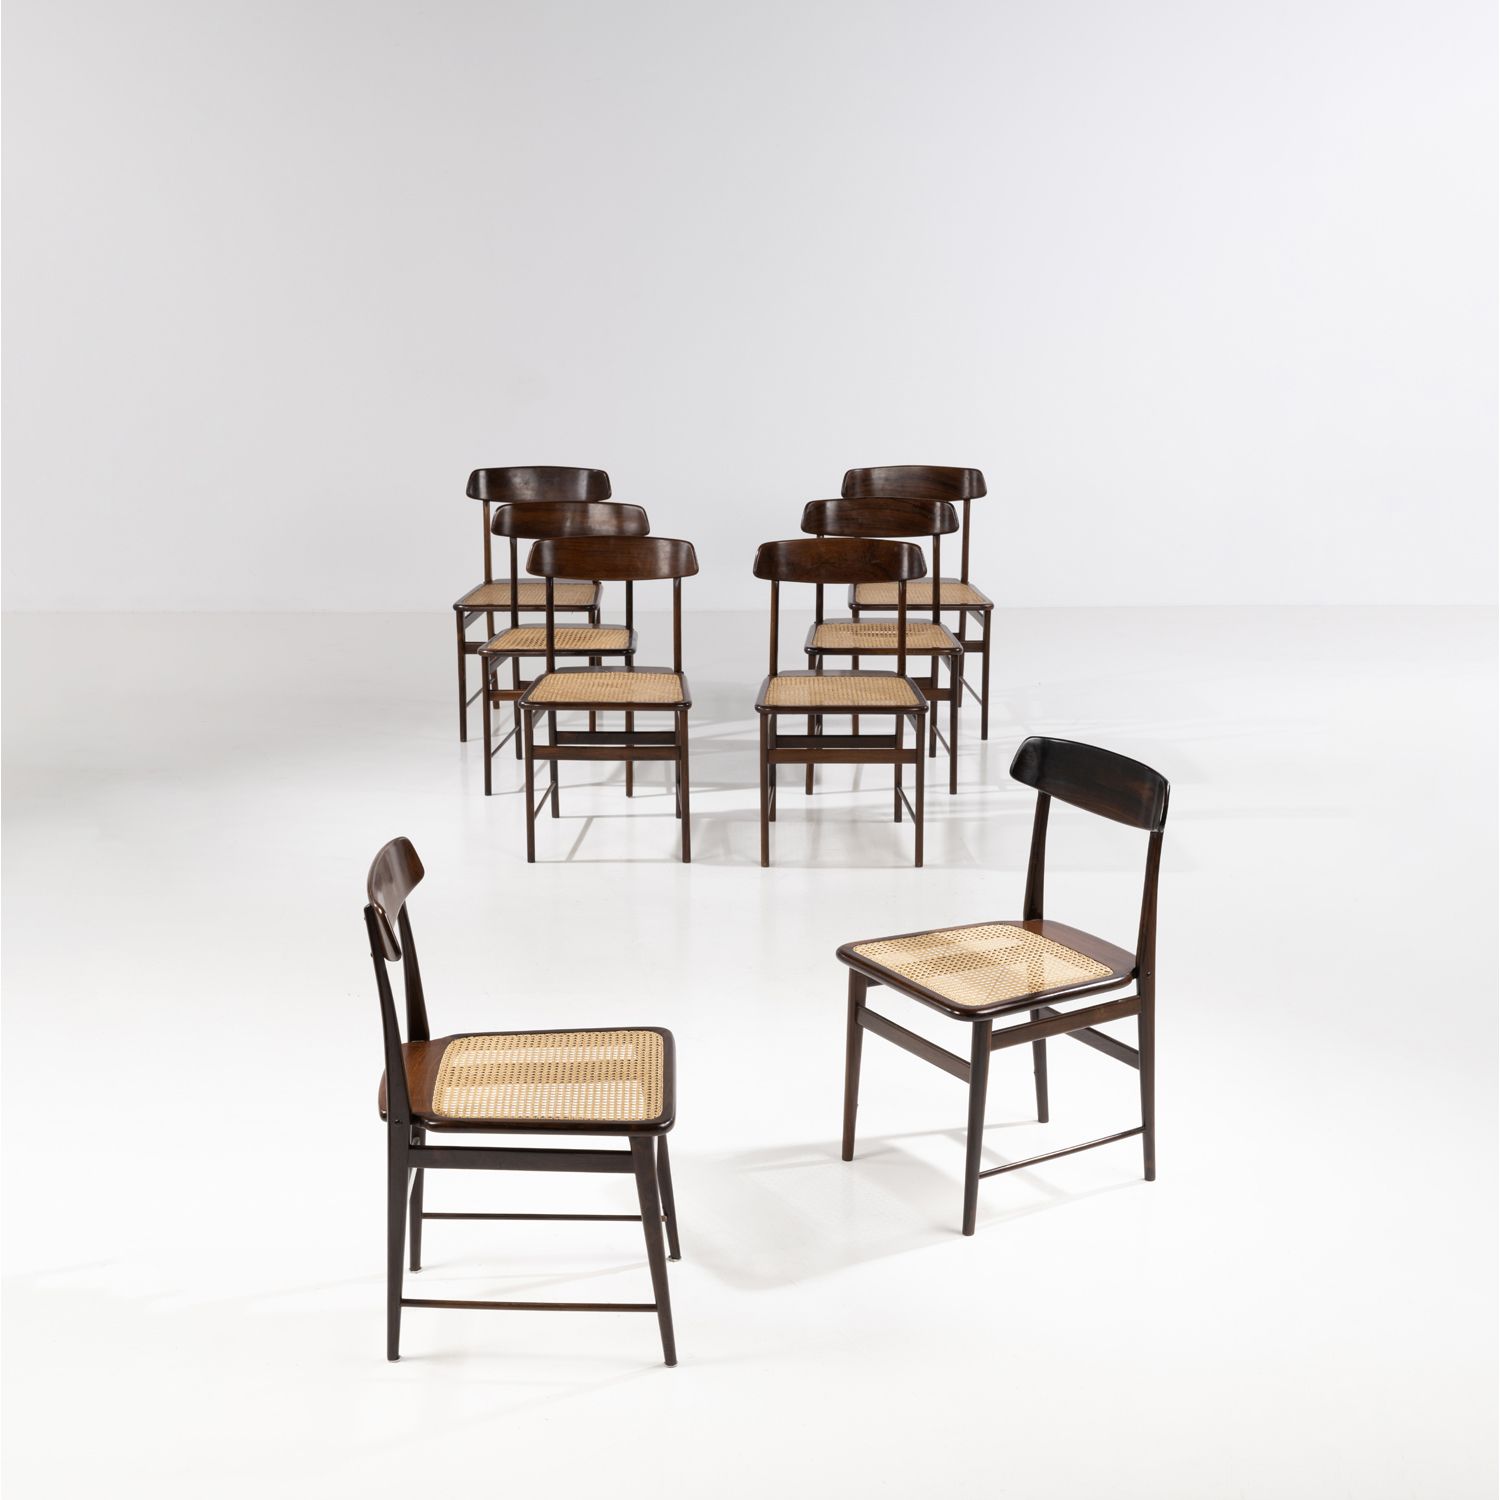 Null Sergio Rodrigues (1927-2014)

Cadeira Lucio Costa

Suite aus acht Stühlen

&hellip;